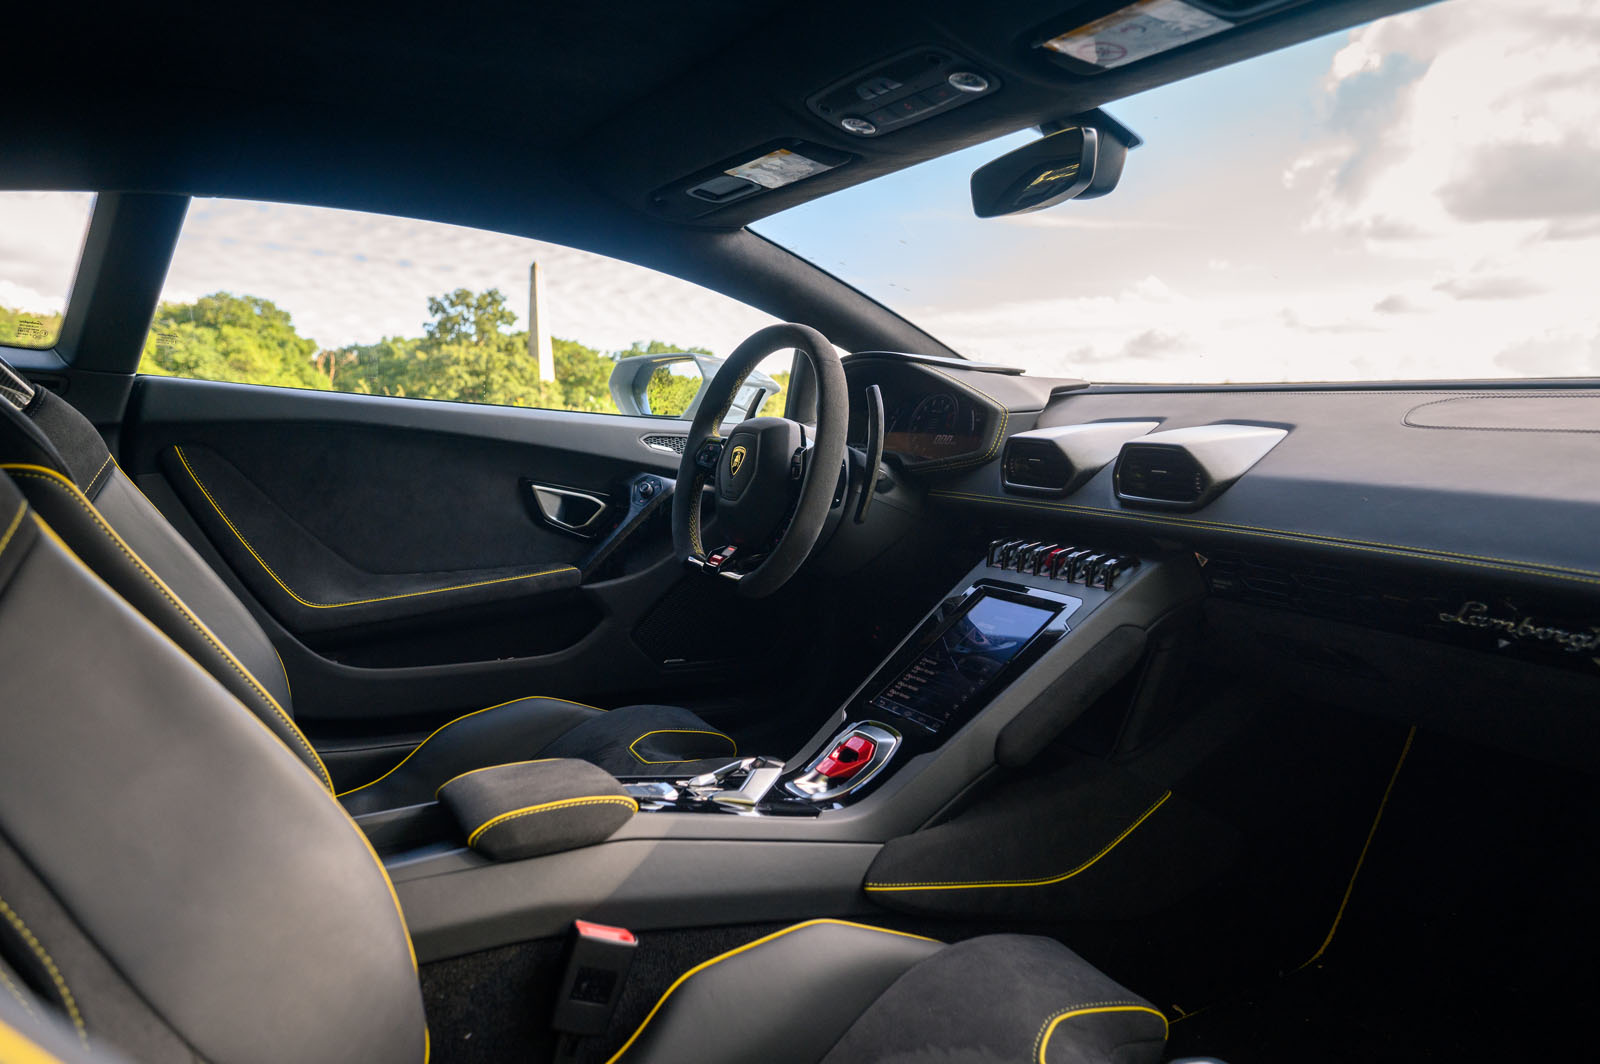 Can a Lamborghini Huracan RWD really be a daily driver?